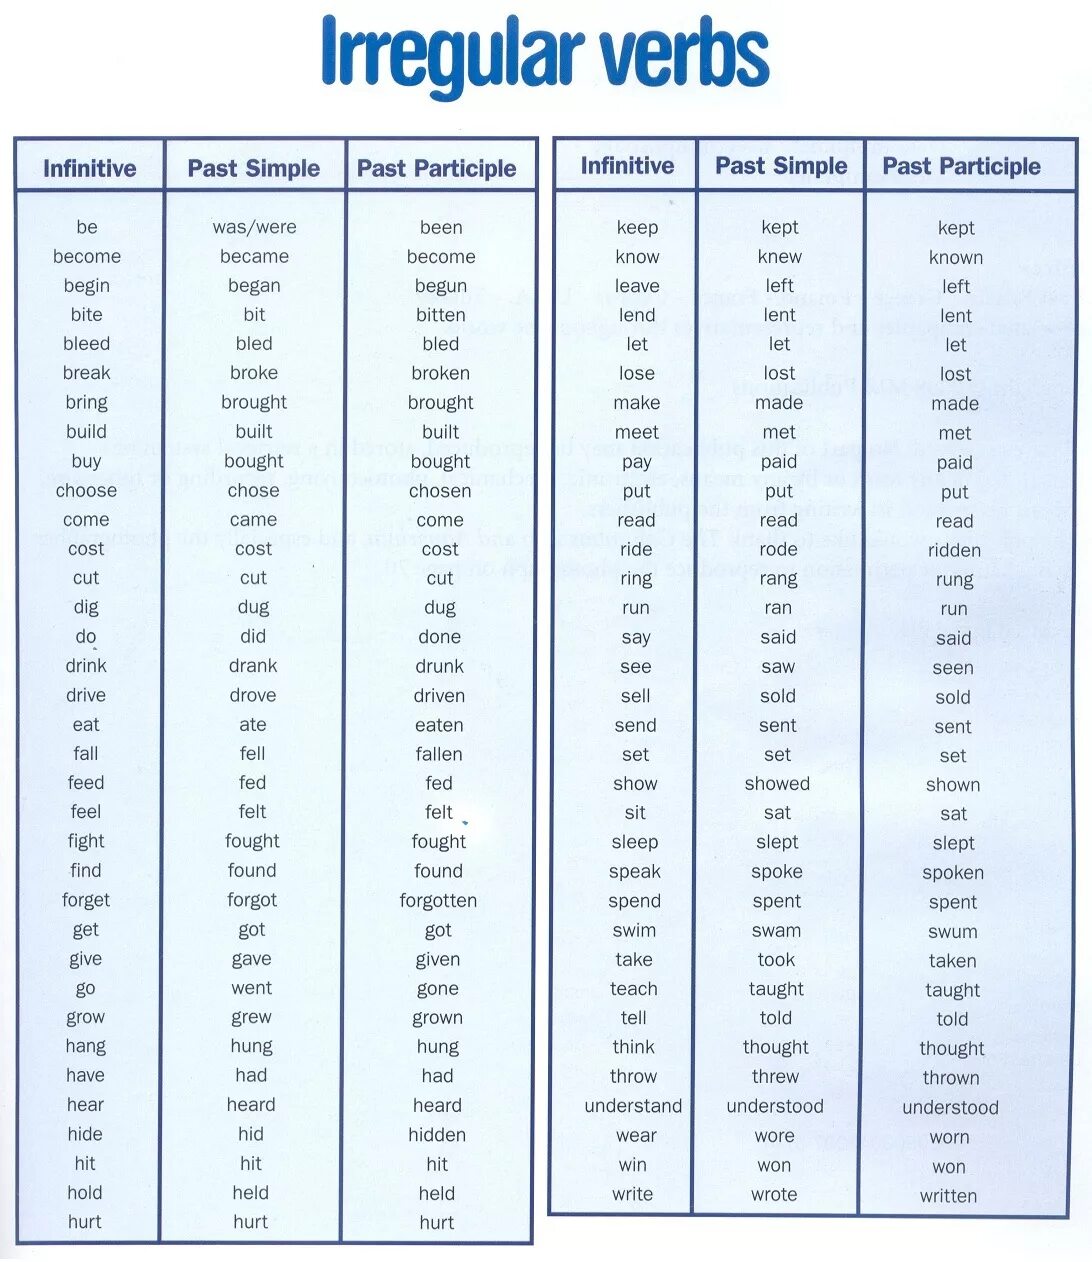 3 форма come в английском. Past simple Irregular verbs таблица. Past simple таблица неправильных глаголов. Неправильные глаголы английского Irregular verbs. Past participle таблица неправильных глаголов.